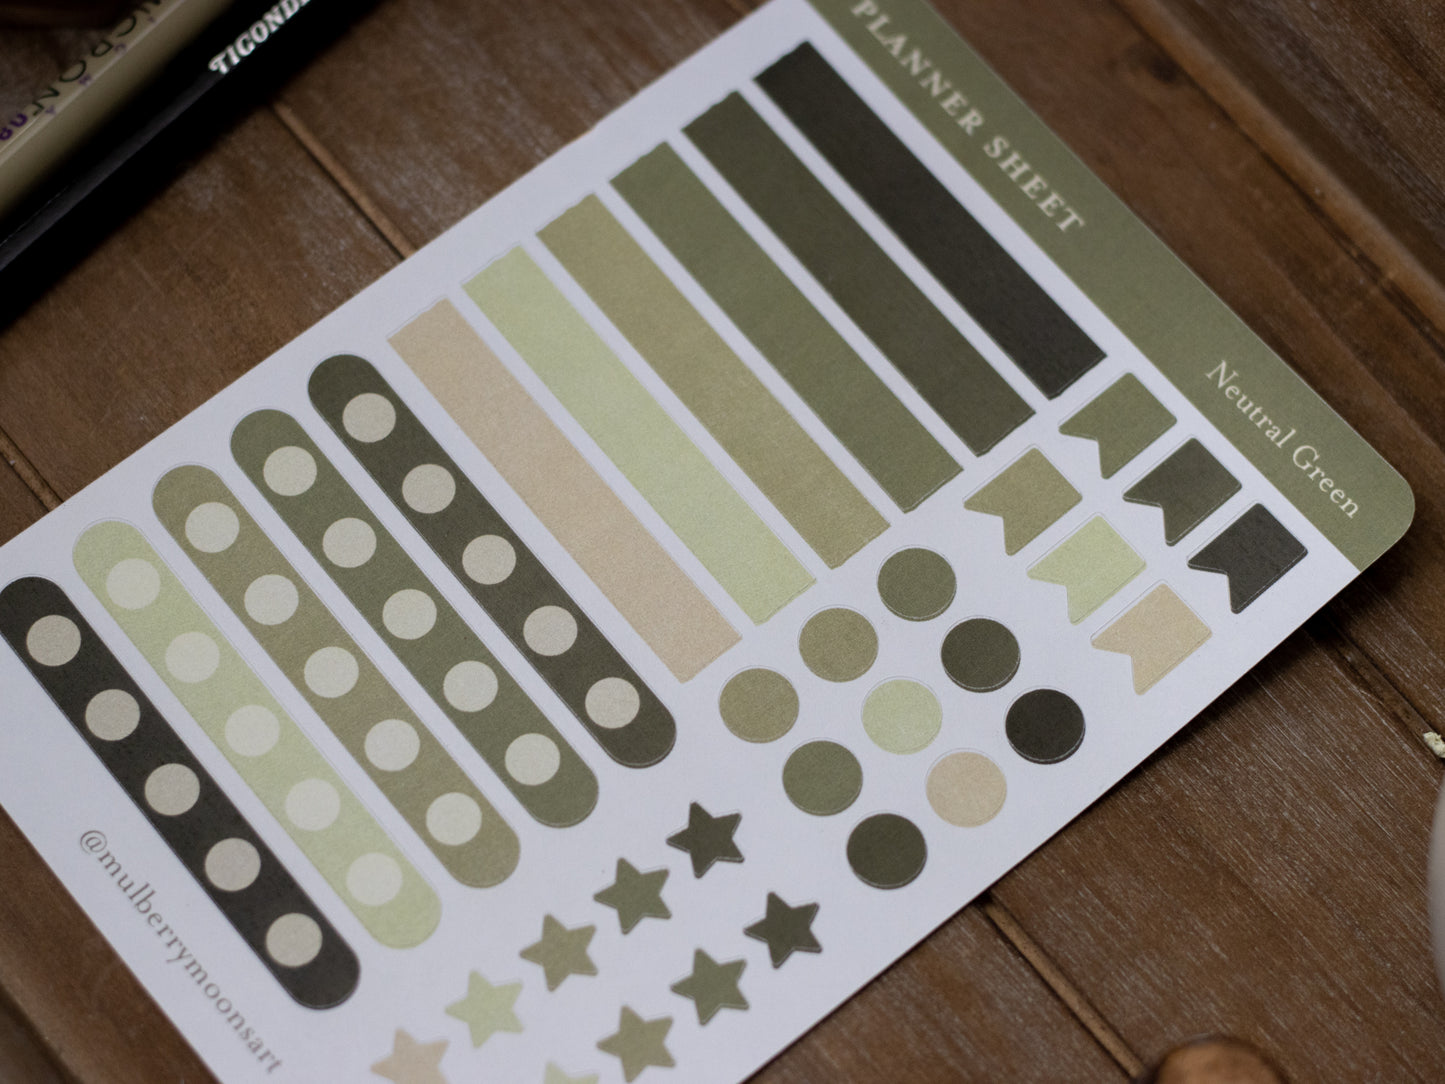 OOPS Planner Sticker Sheet - Neutral Green